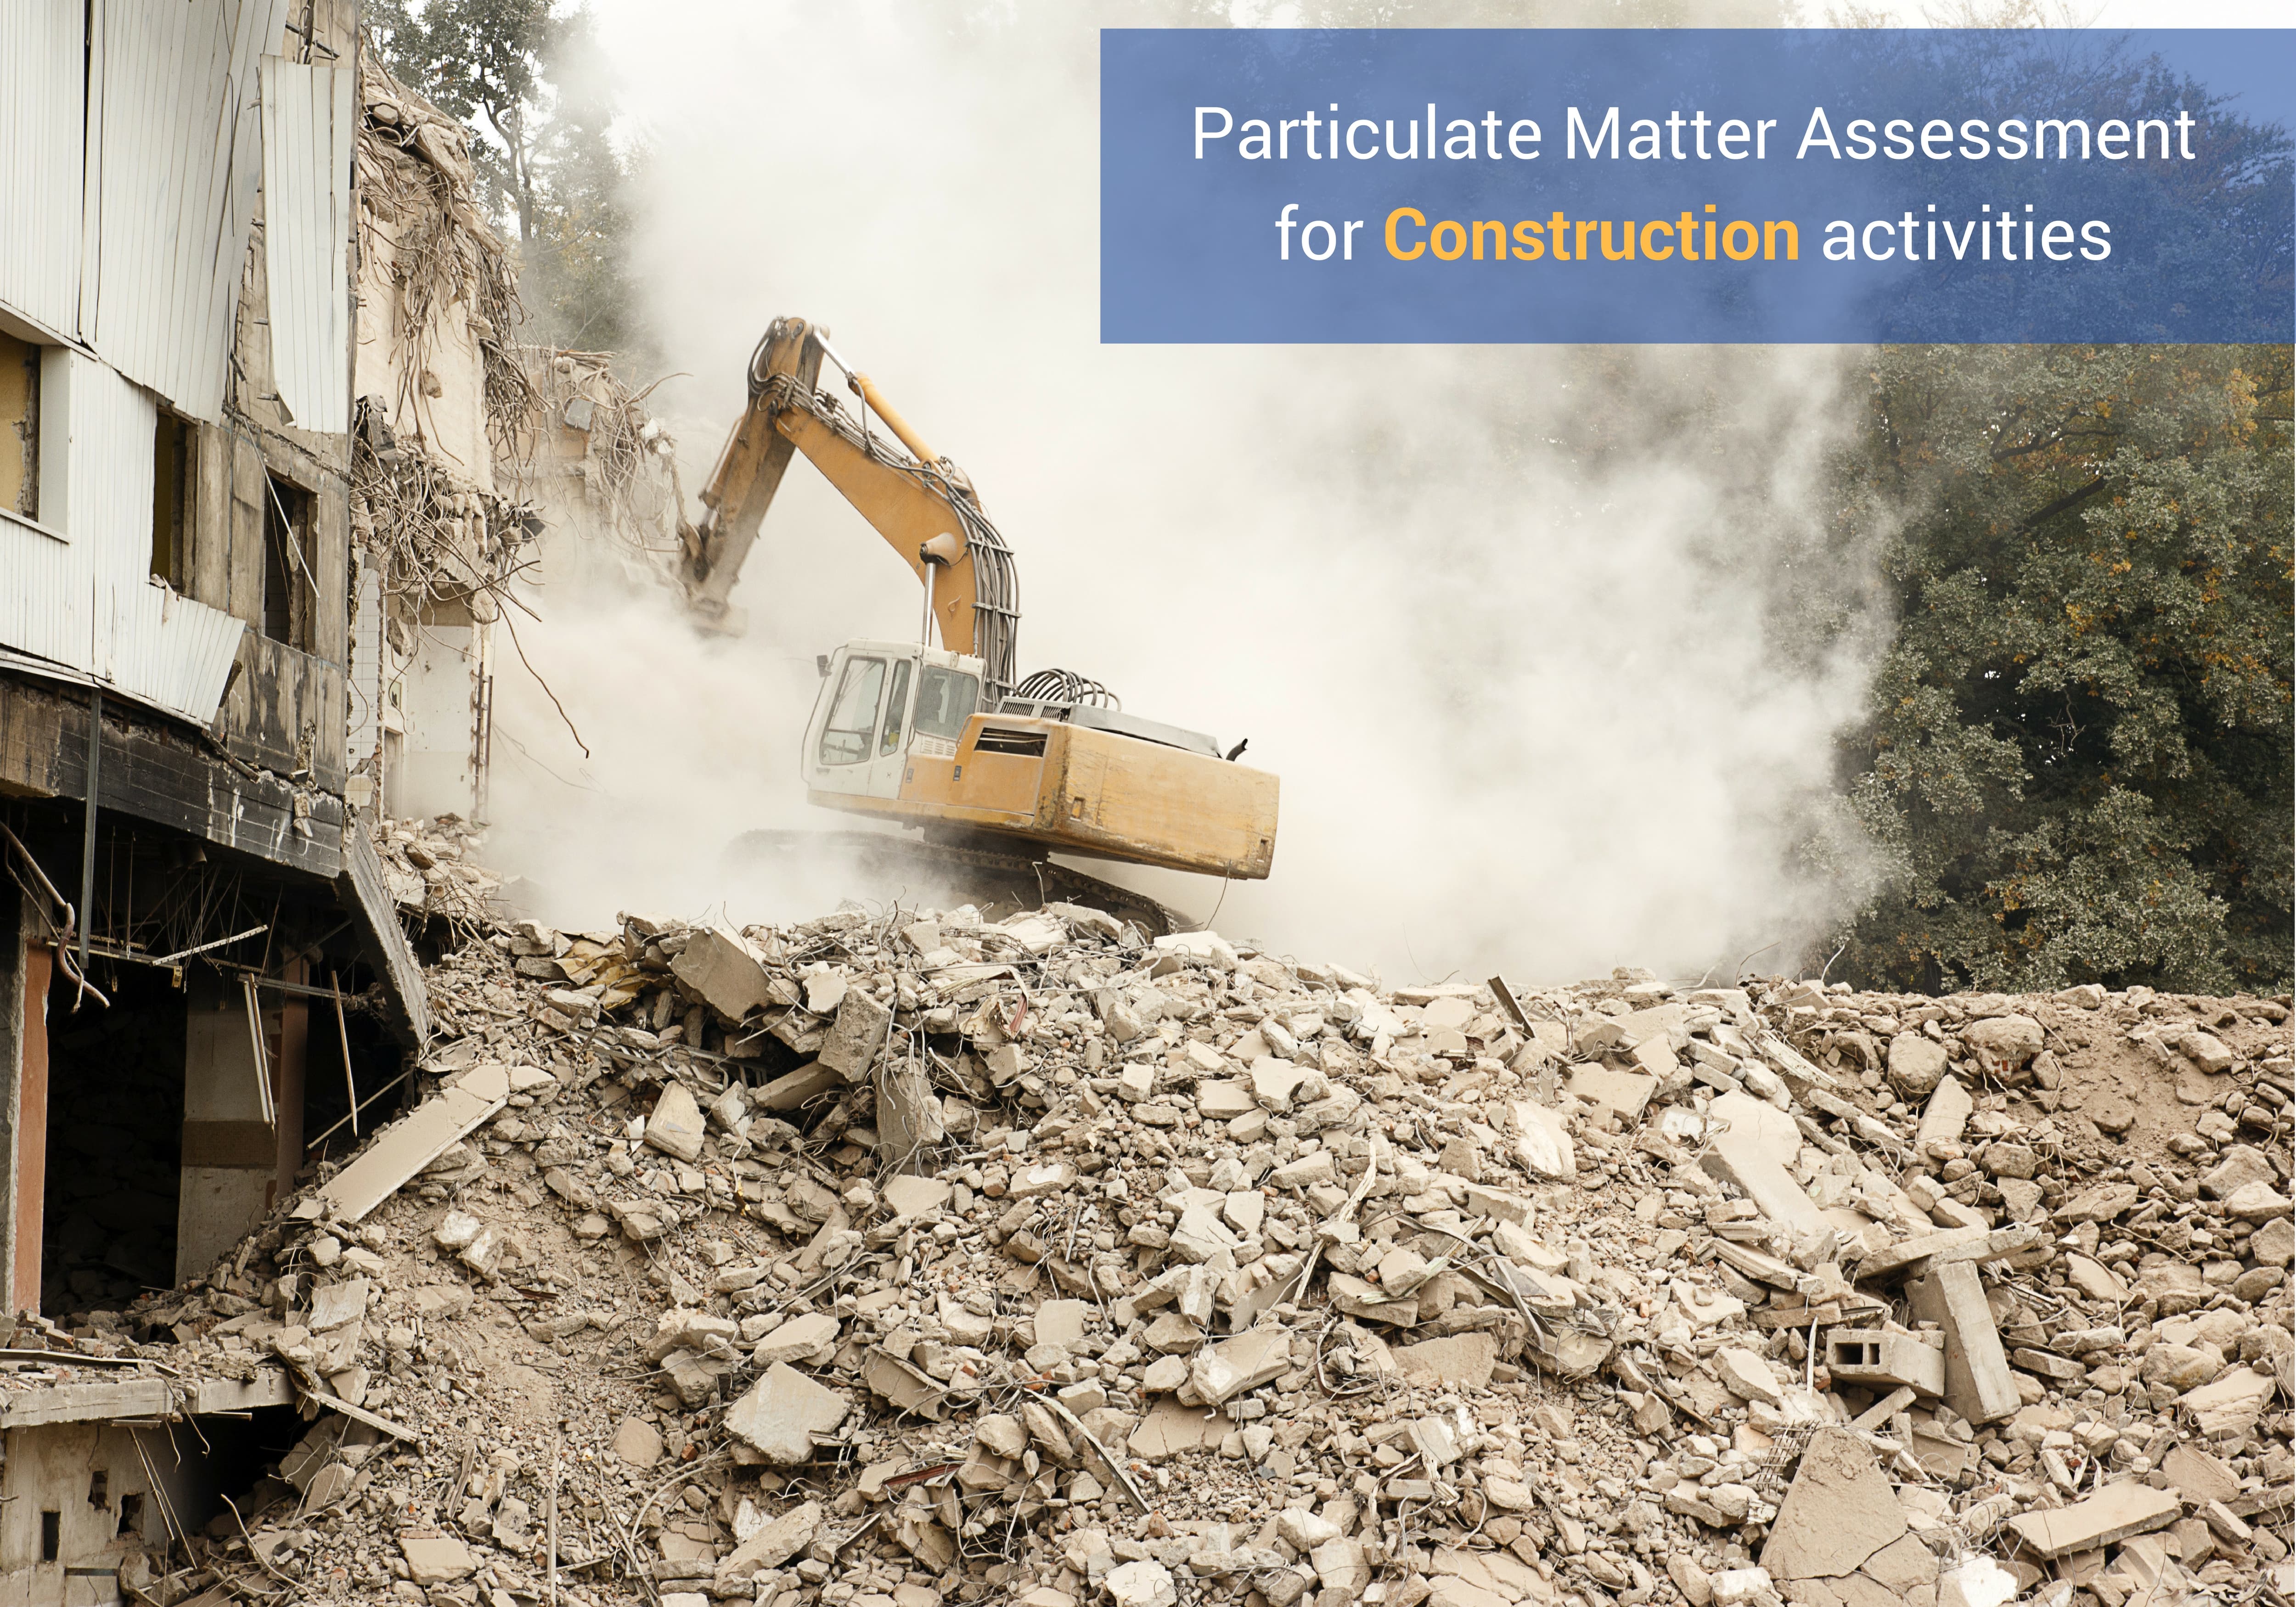 construction activities demolition activities pollution